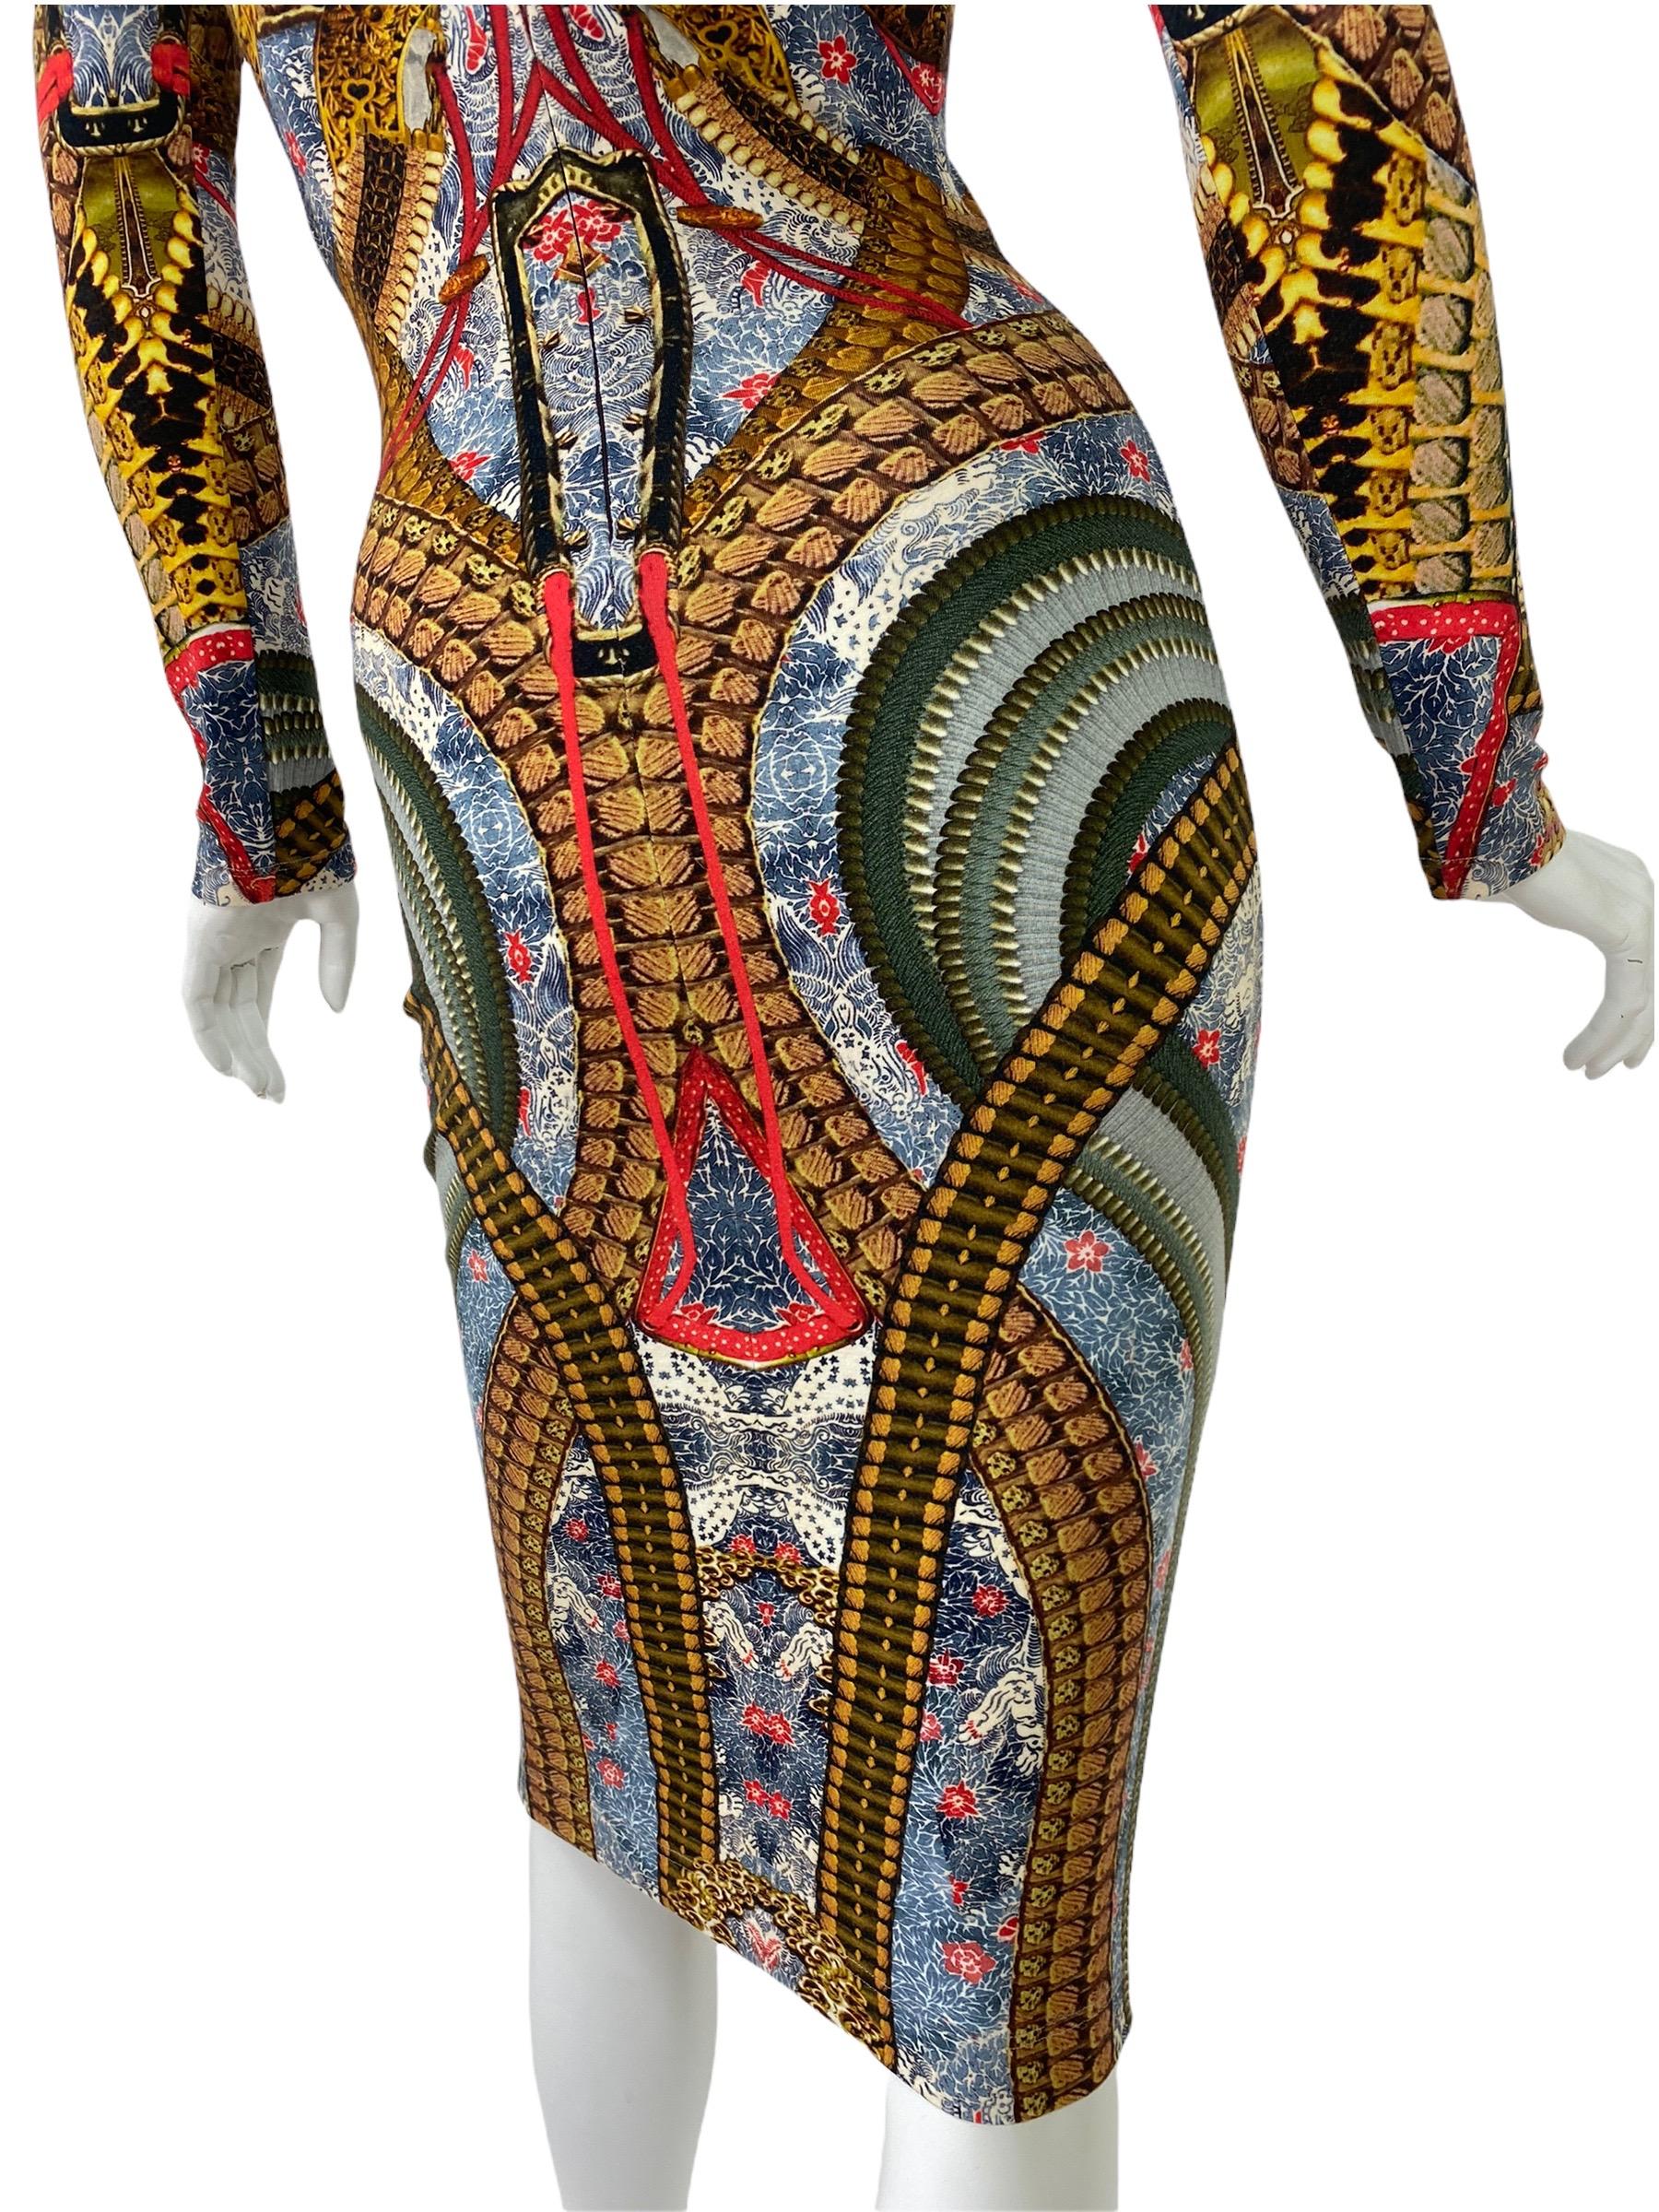 2010 Alexander McQueen Samurai Print Dress In New Condition For Sale In Montgomery, TX